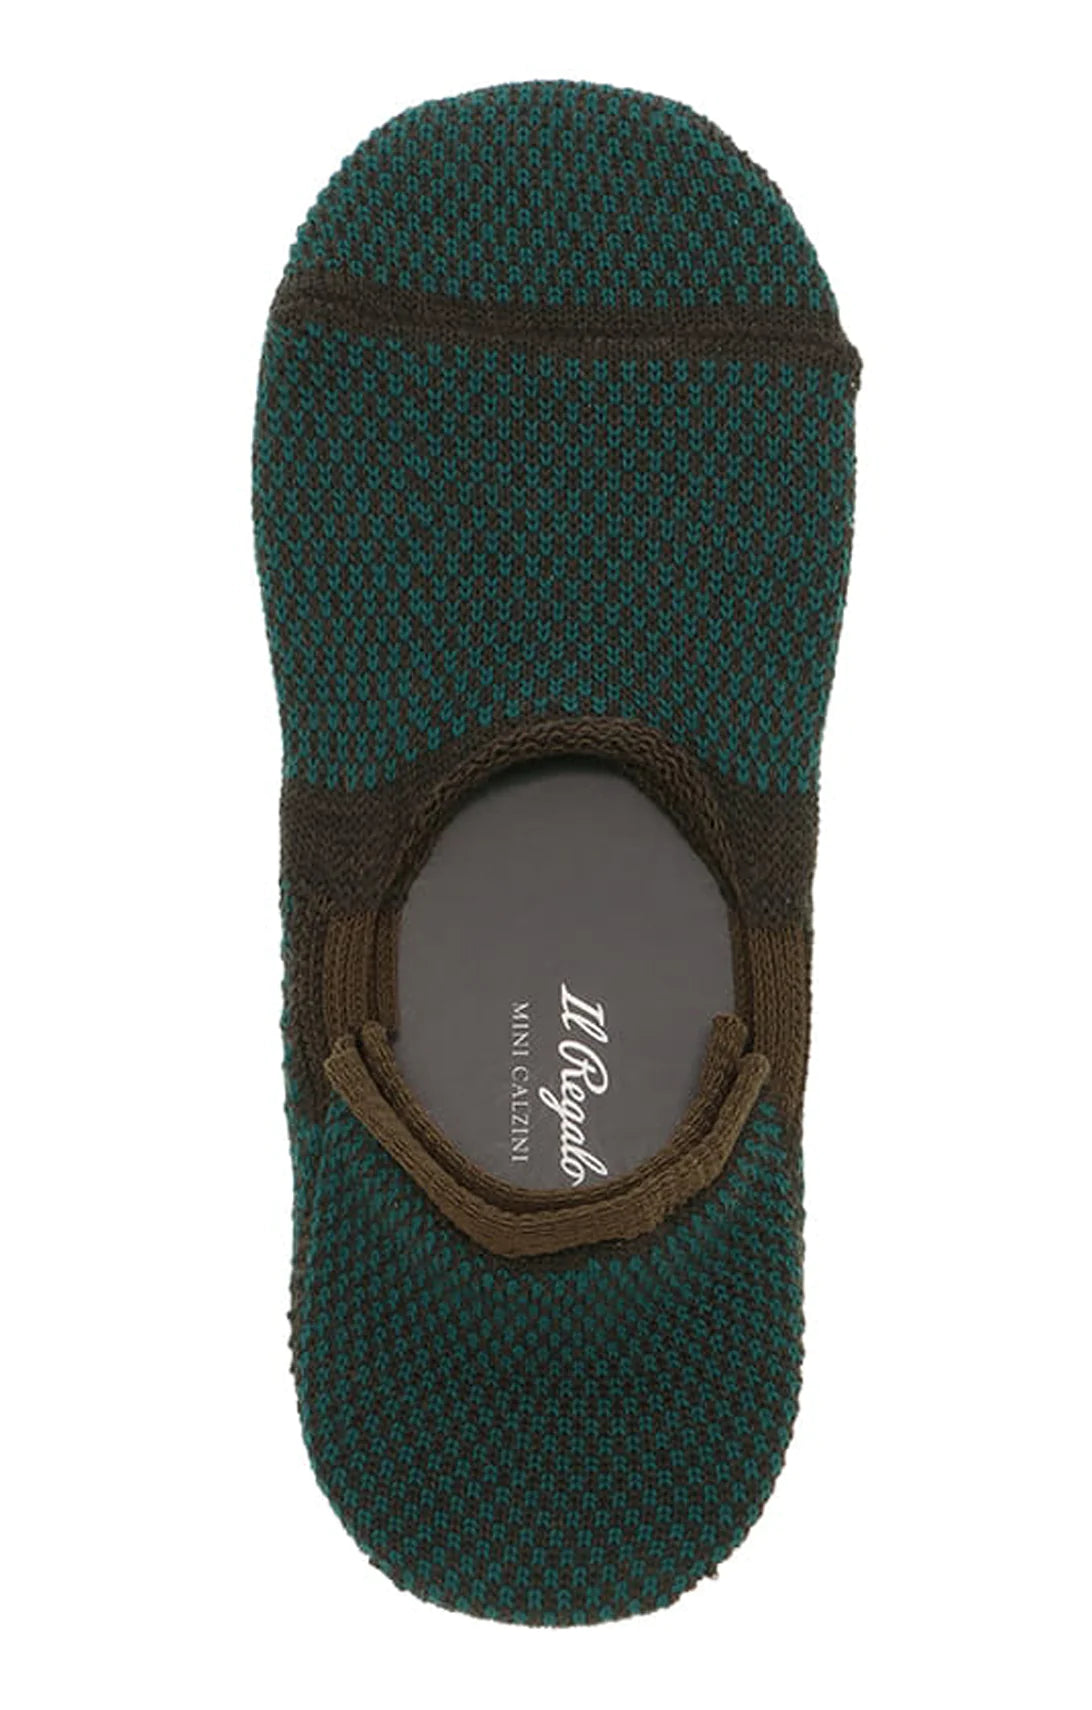 Il Regalo's Mesh Super Extra Fine Wool Liner Socks in Green